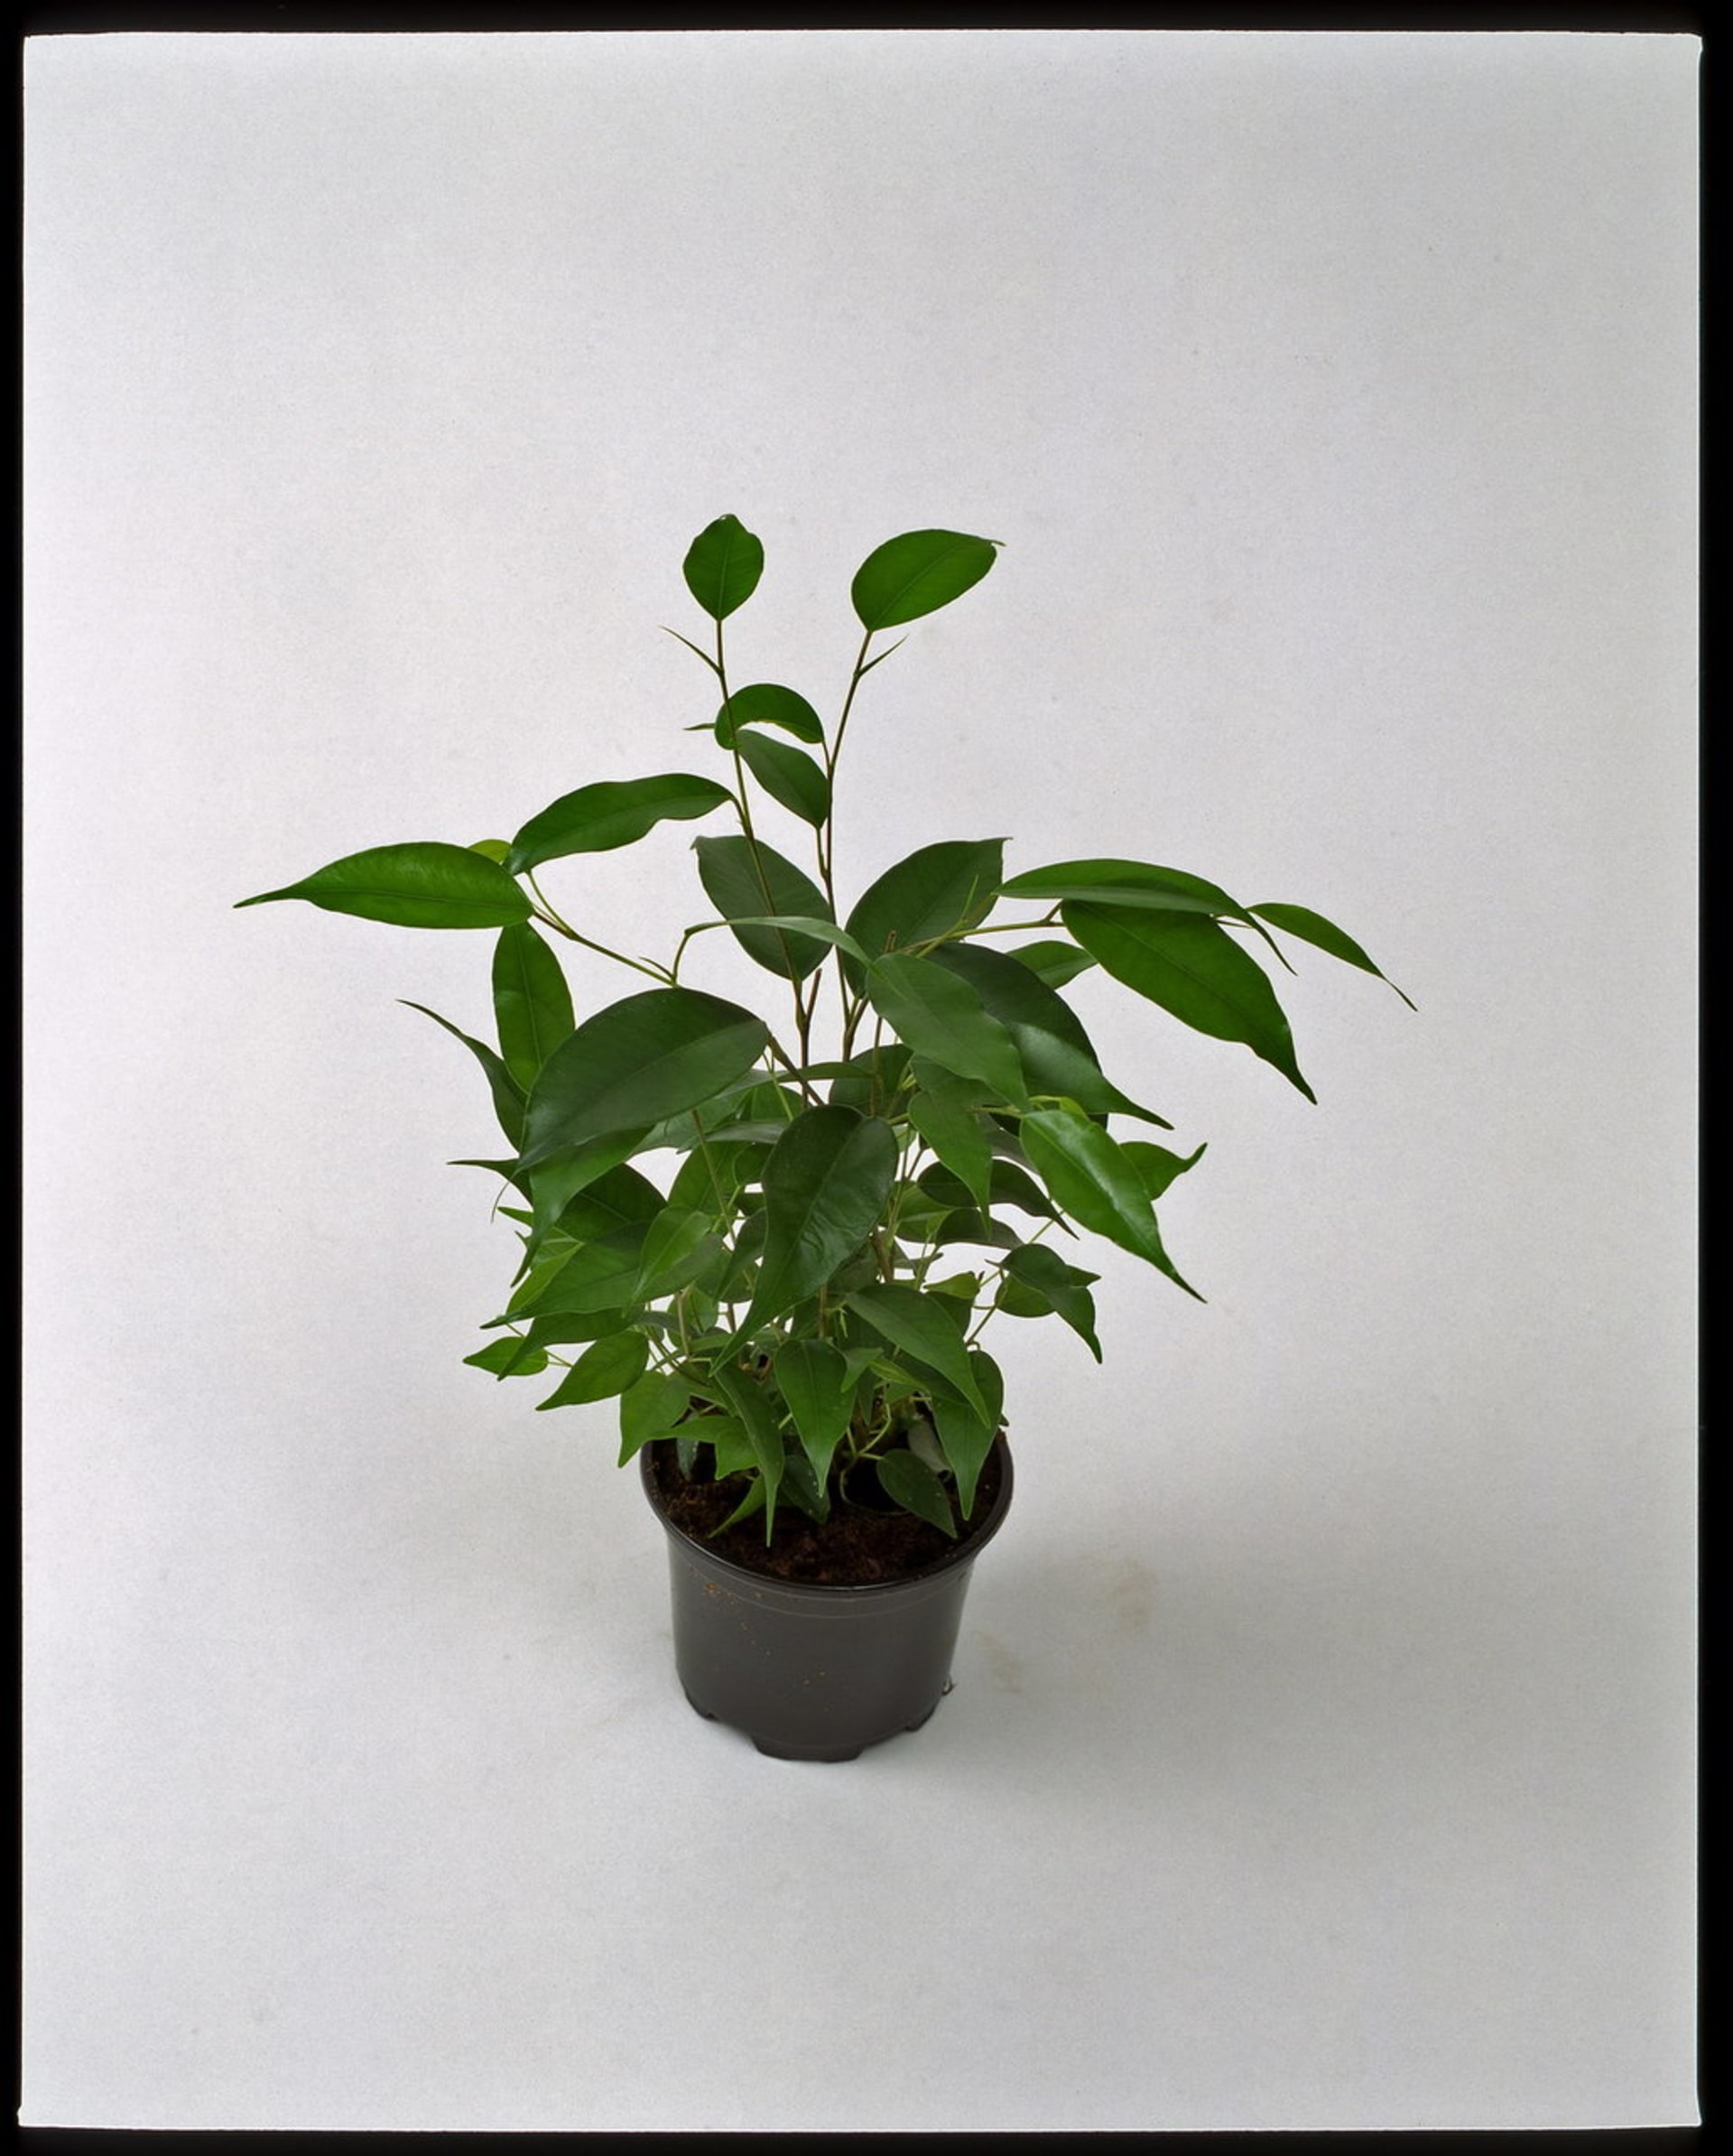 Fíkus/Ficus benjamina